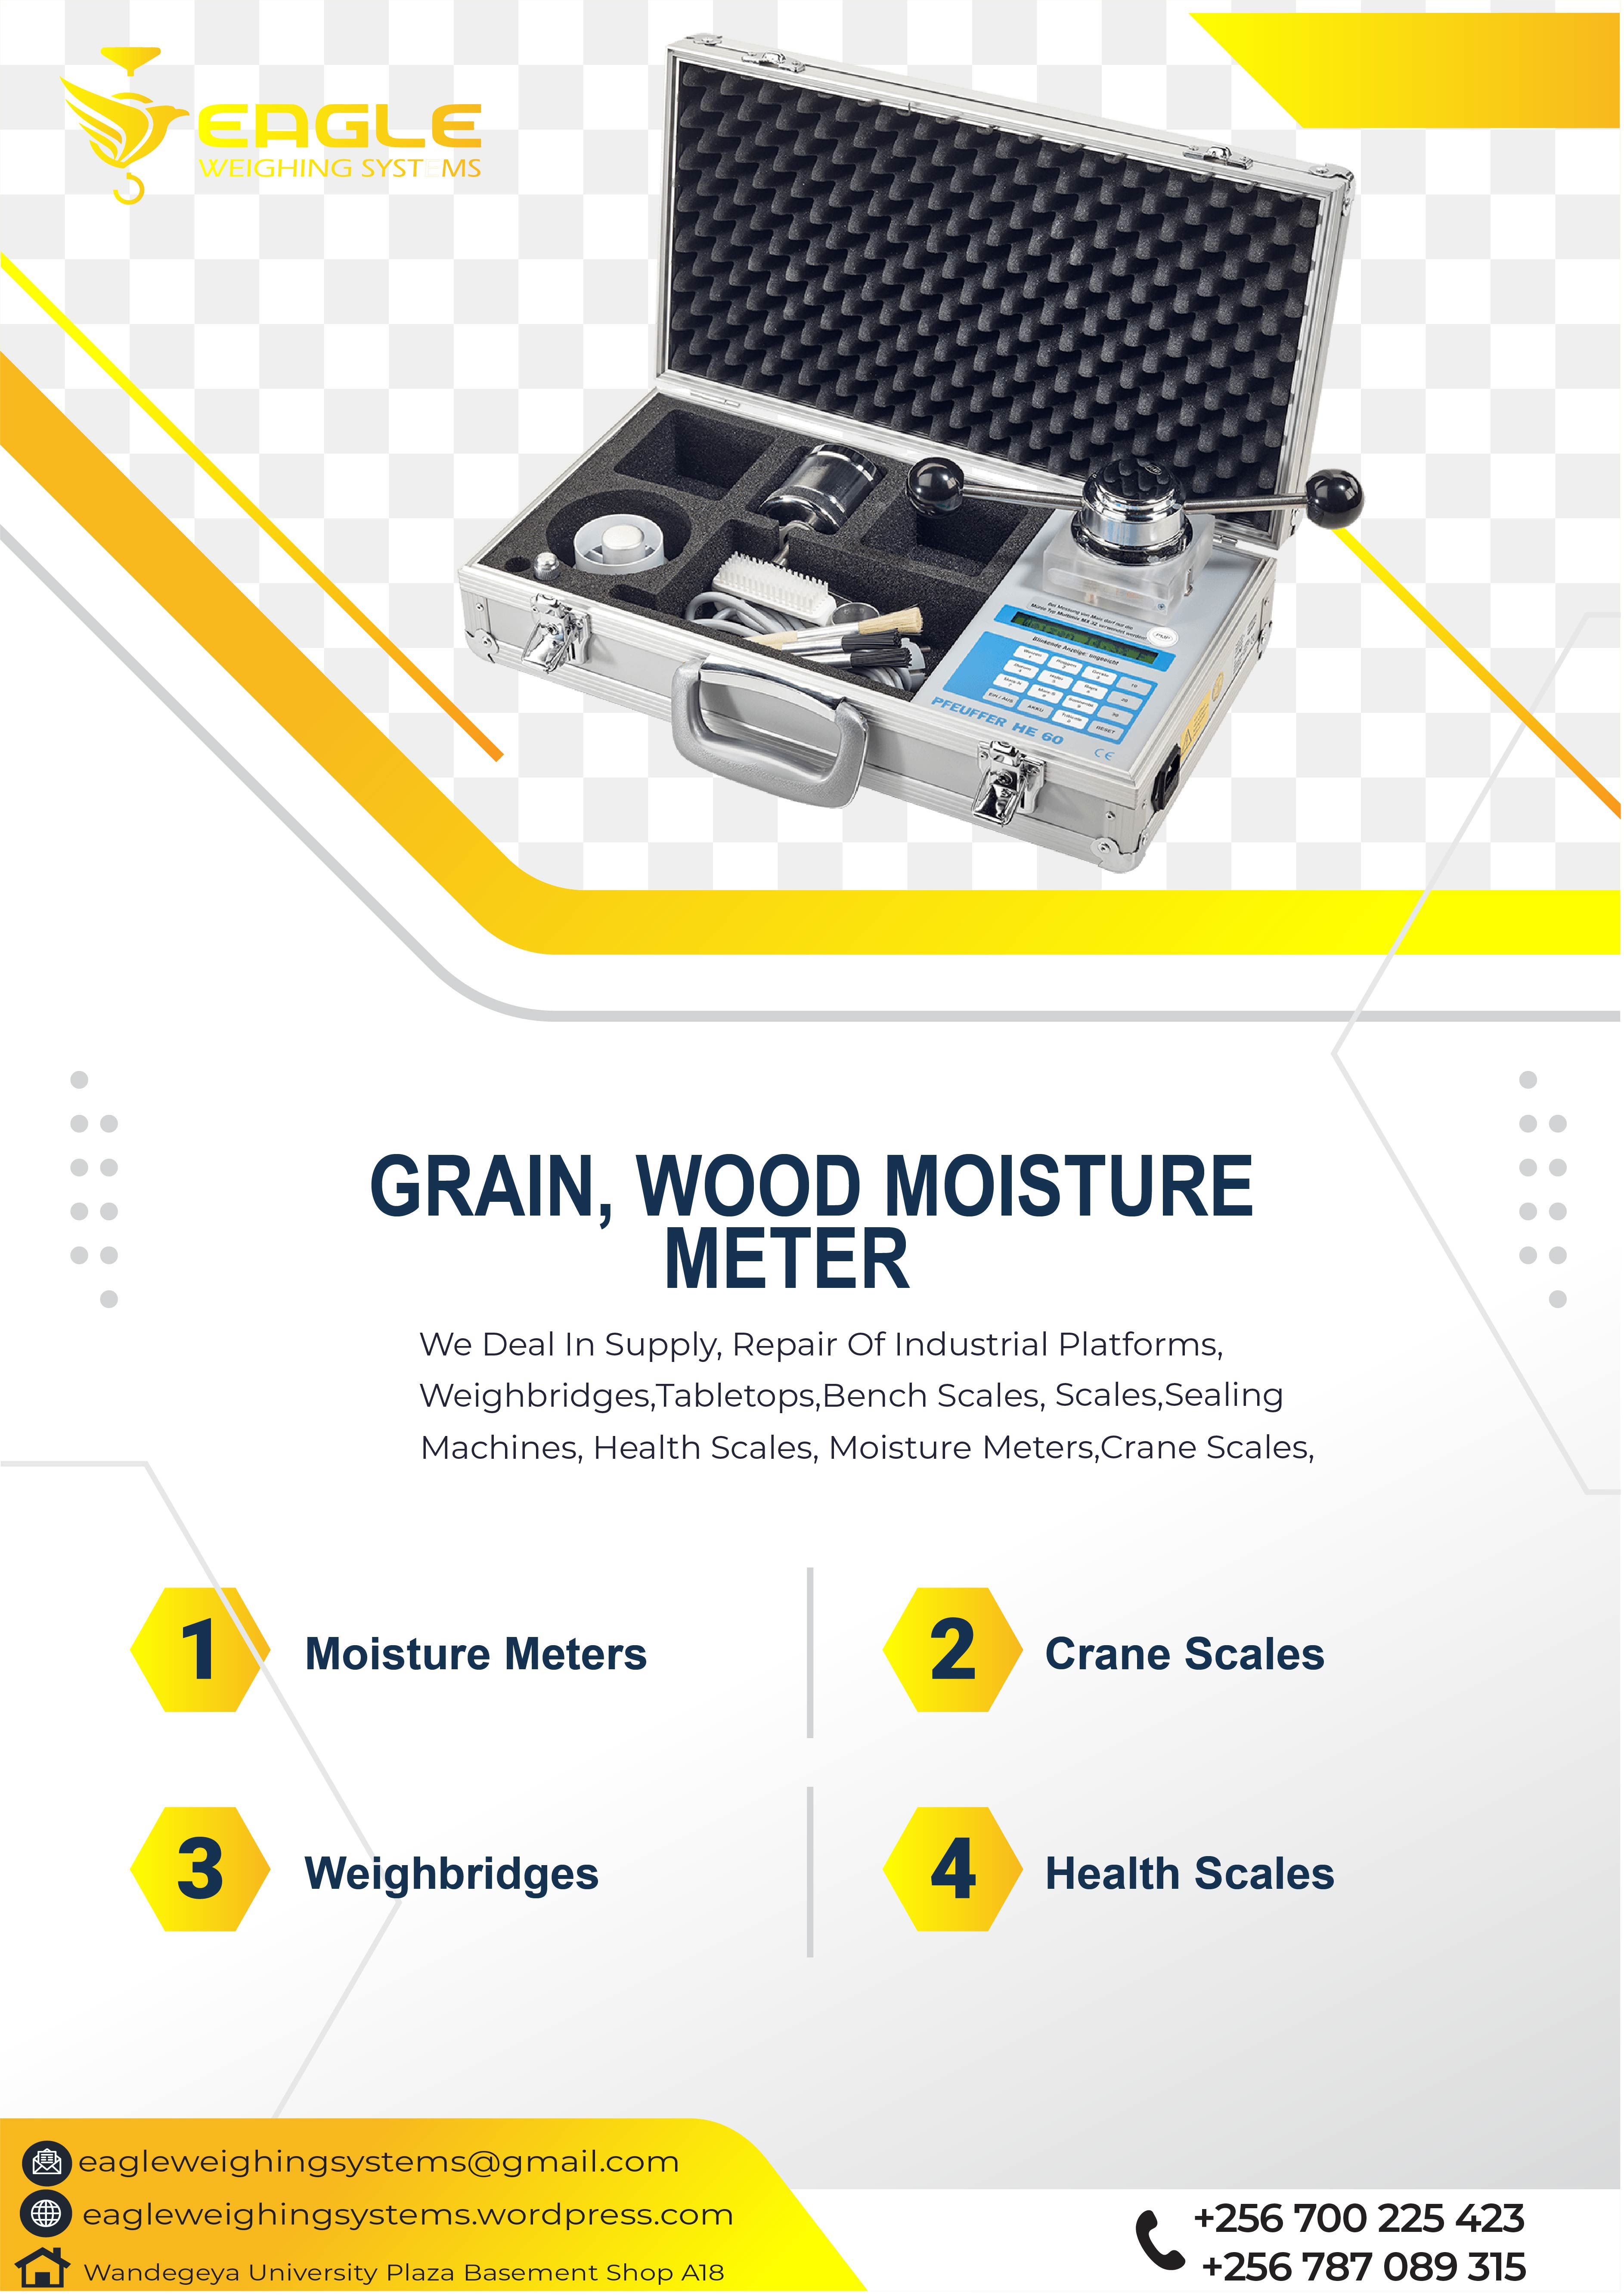 Grain moisture meter for seeds and grains in Kampala Uganda'